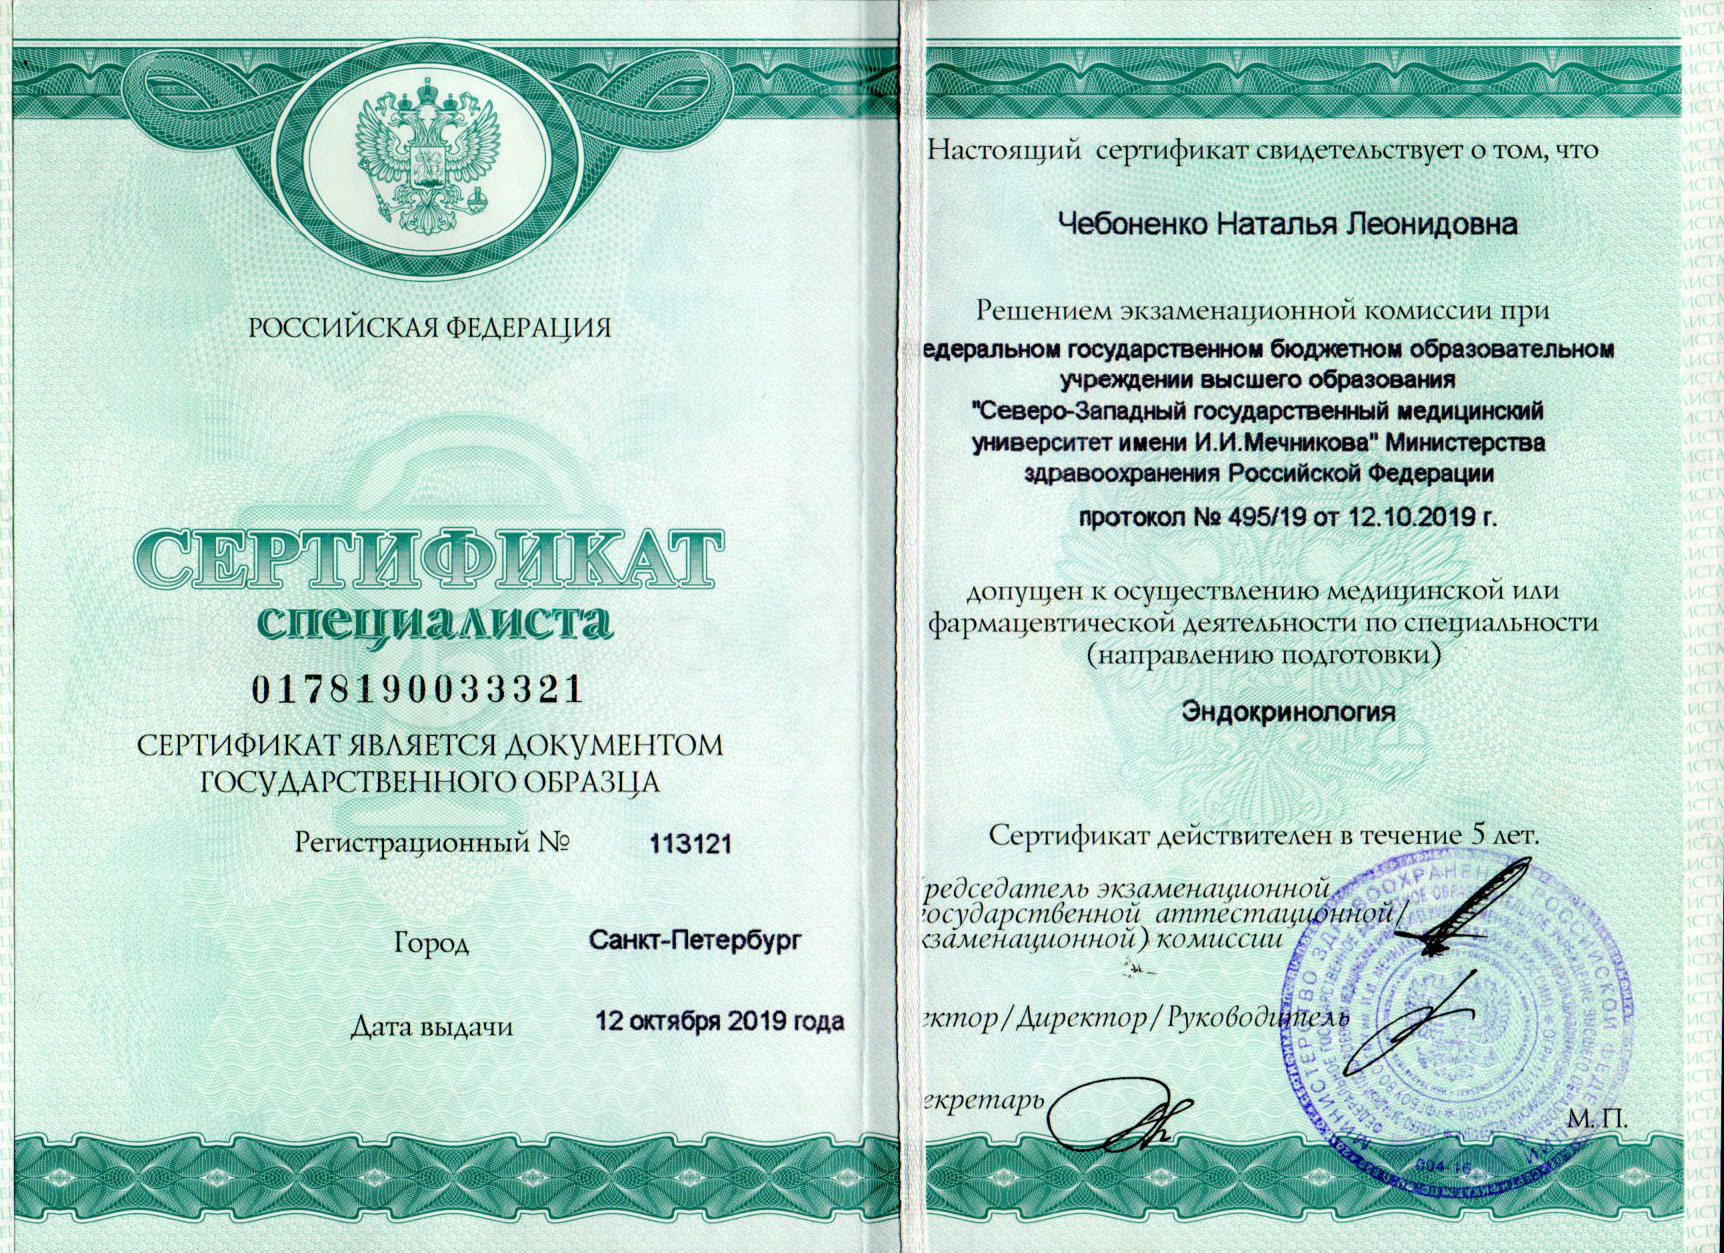 Сертификат специалиста энедокринология